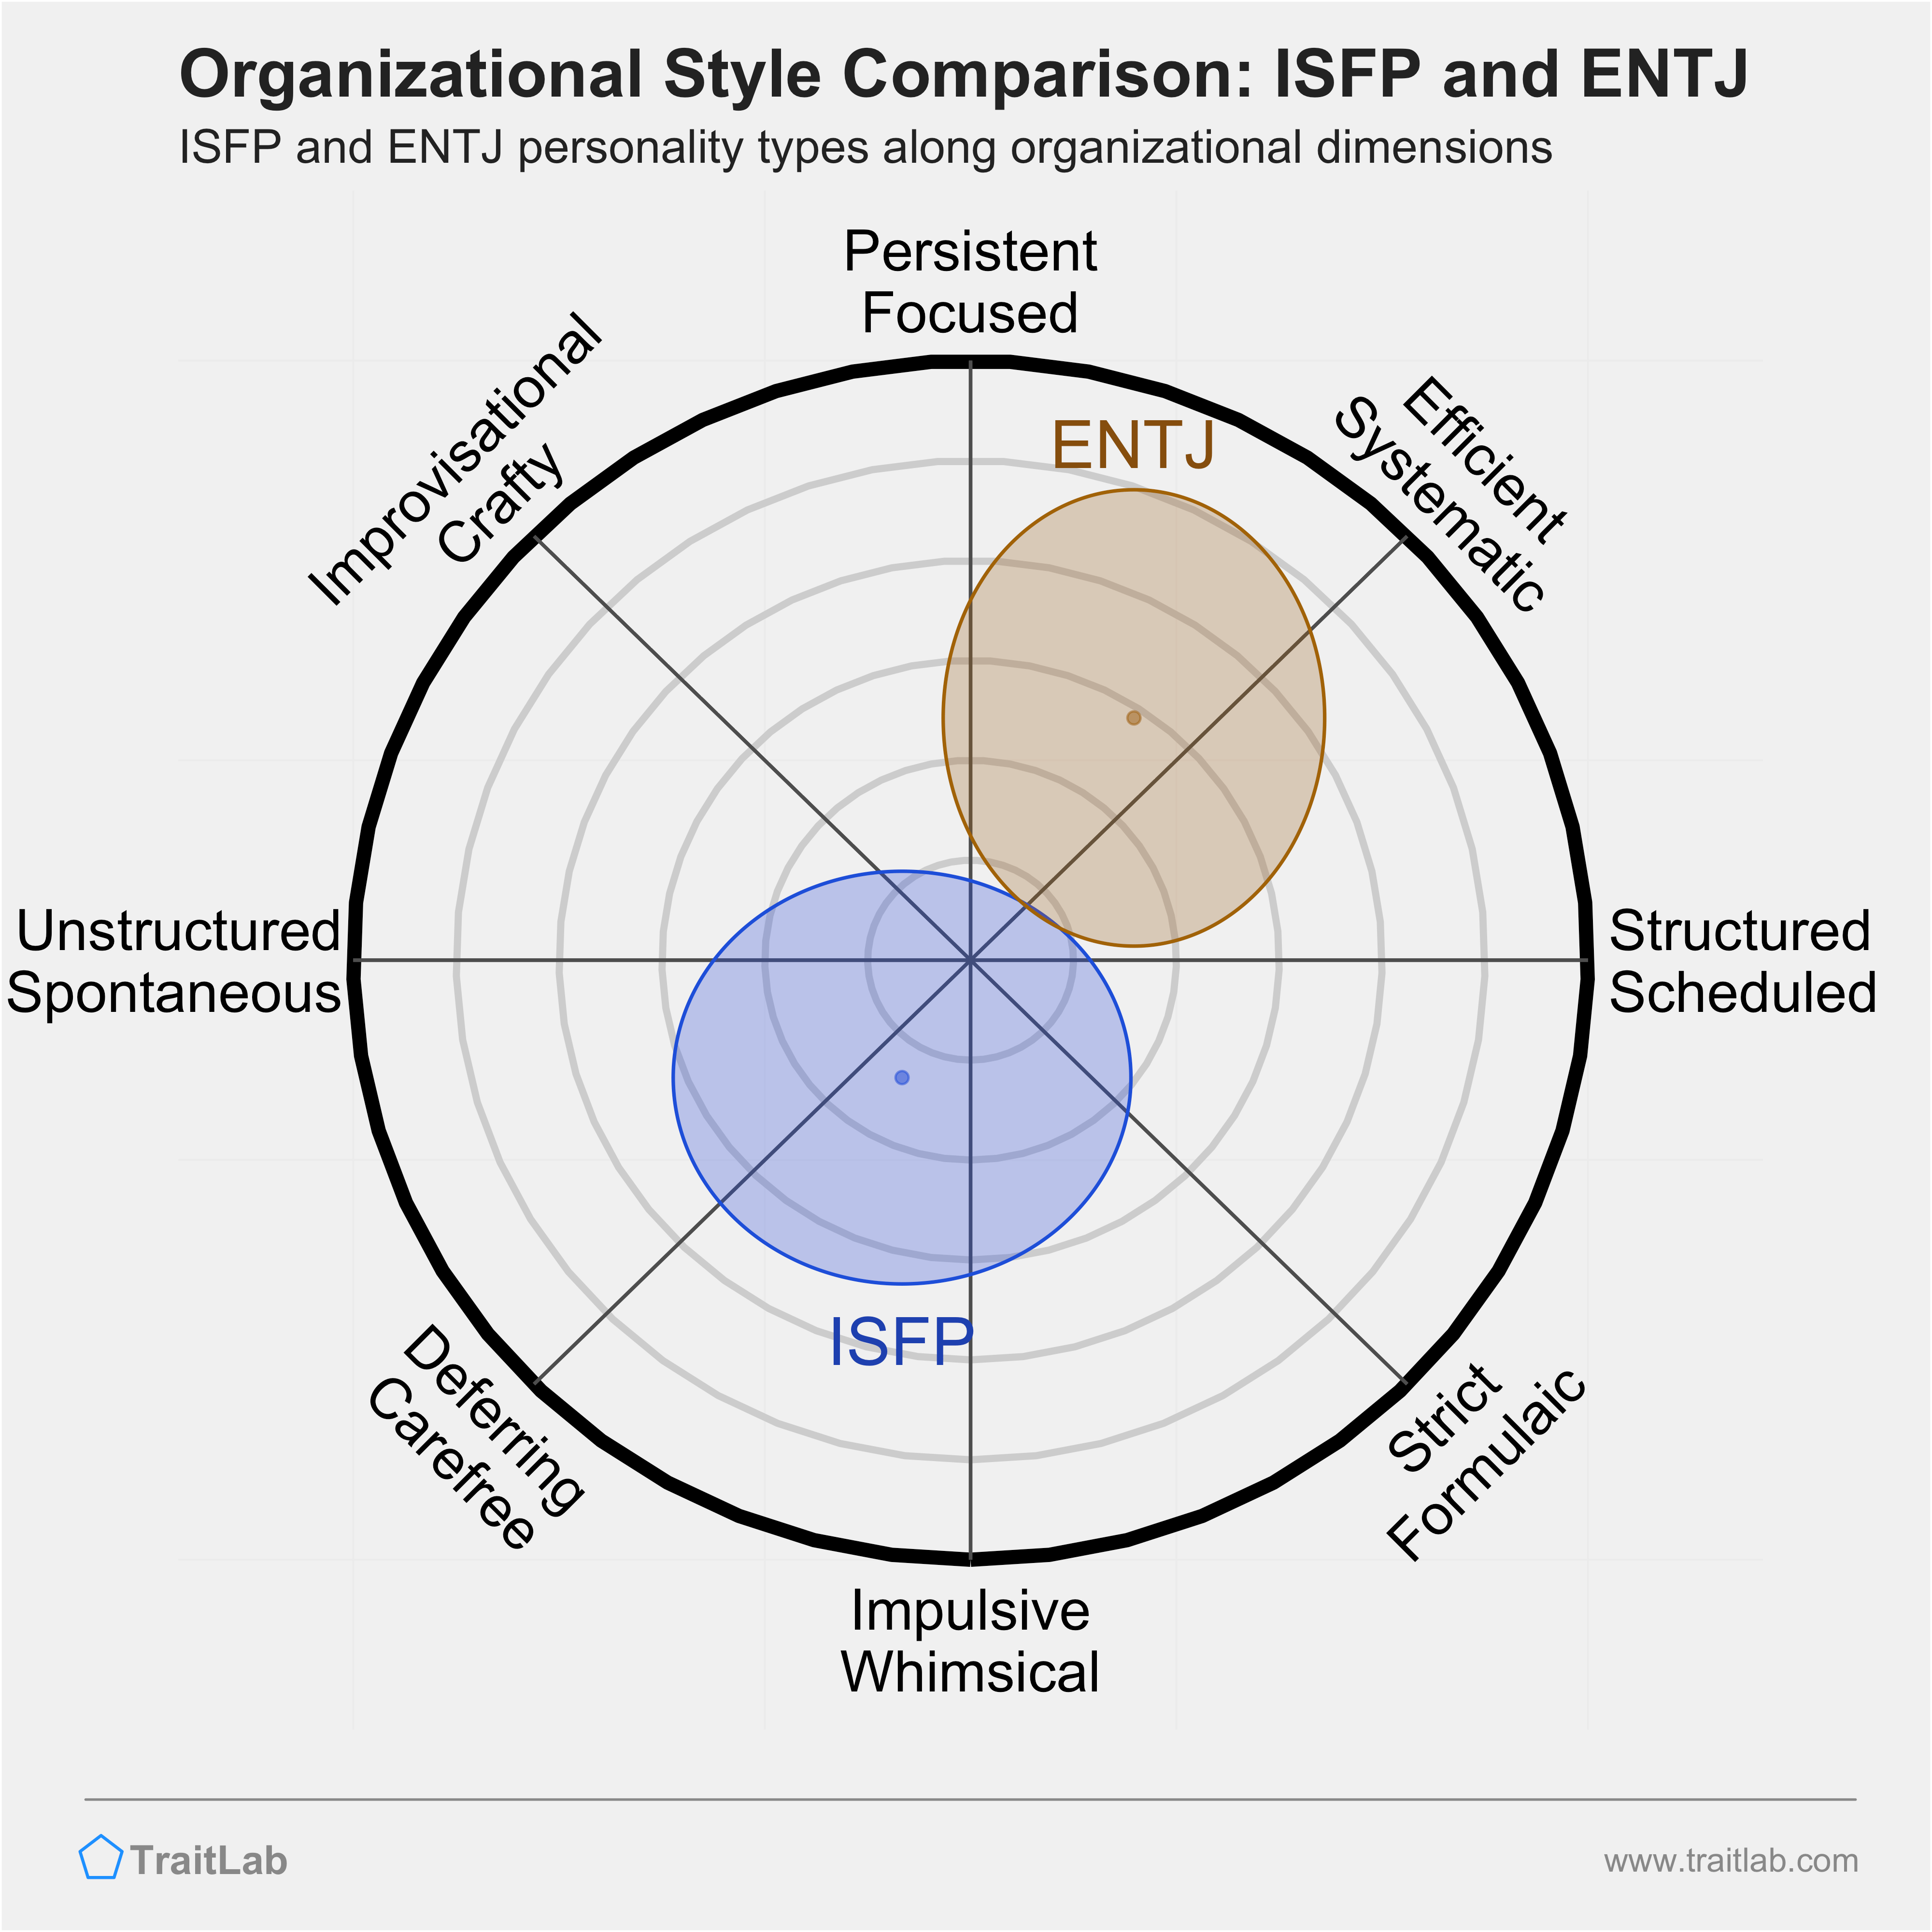 ISFP and ENTJ comparison across organizational dimensions